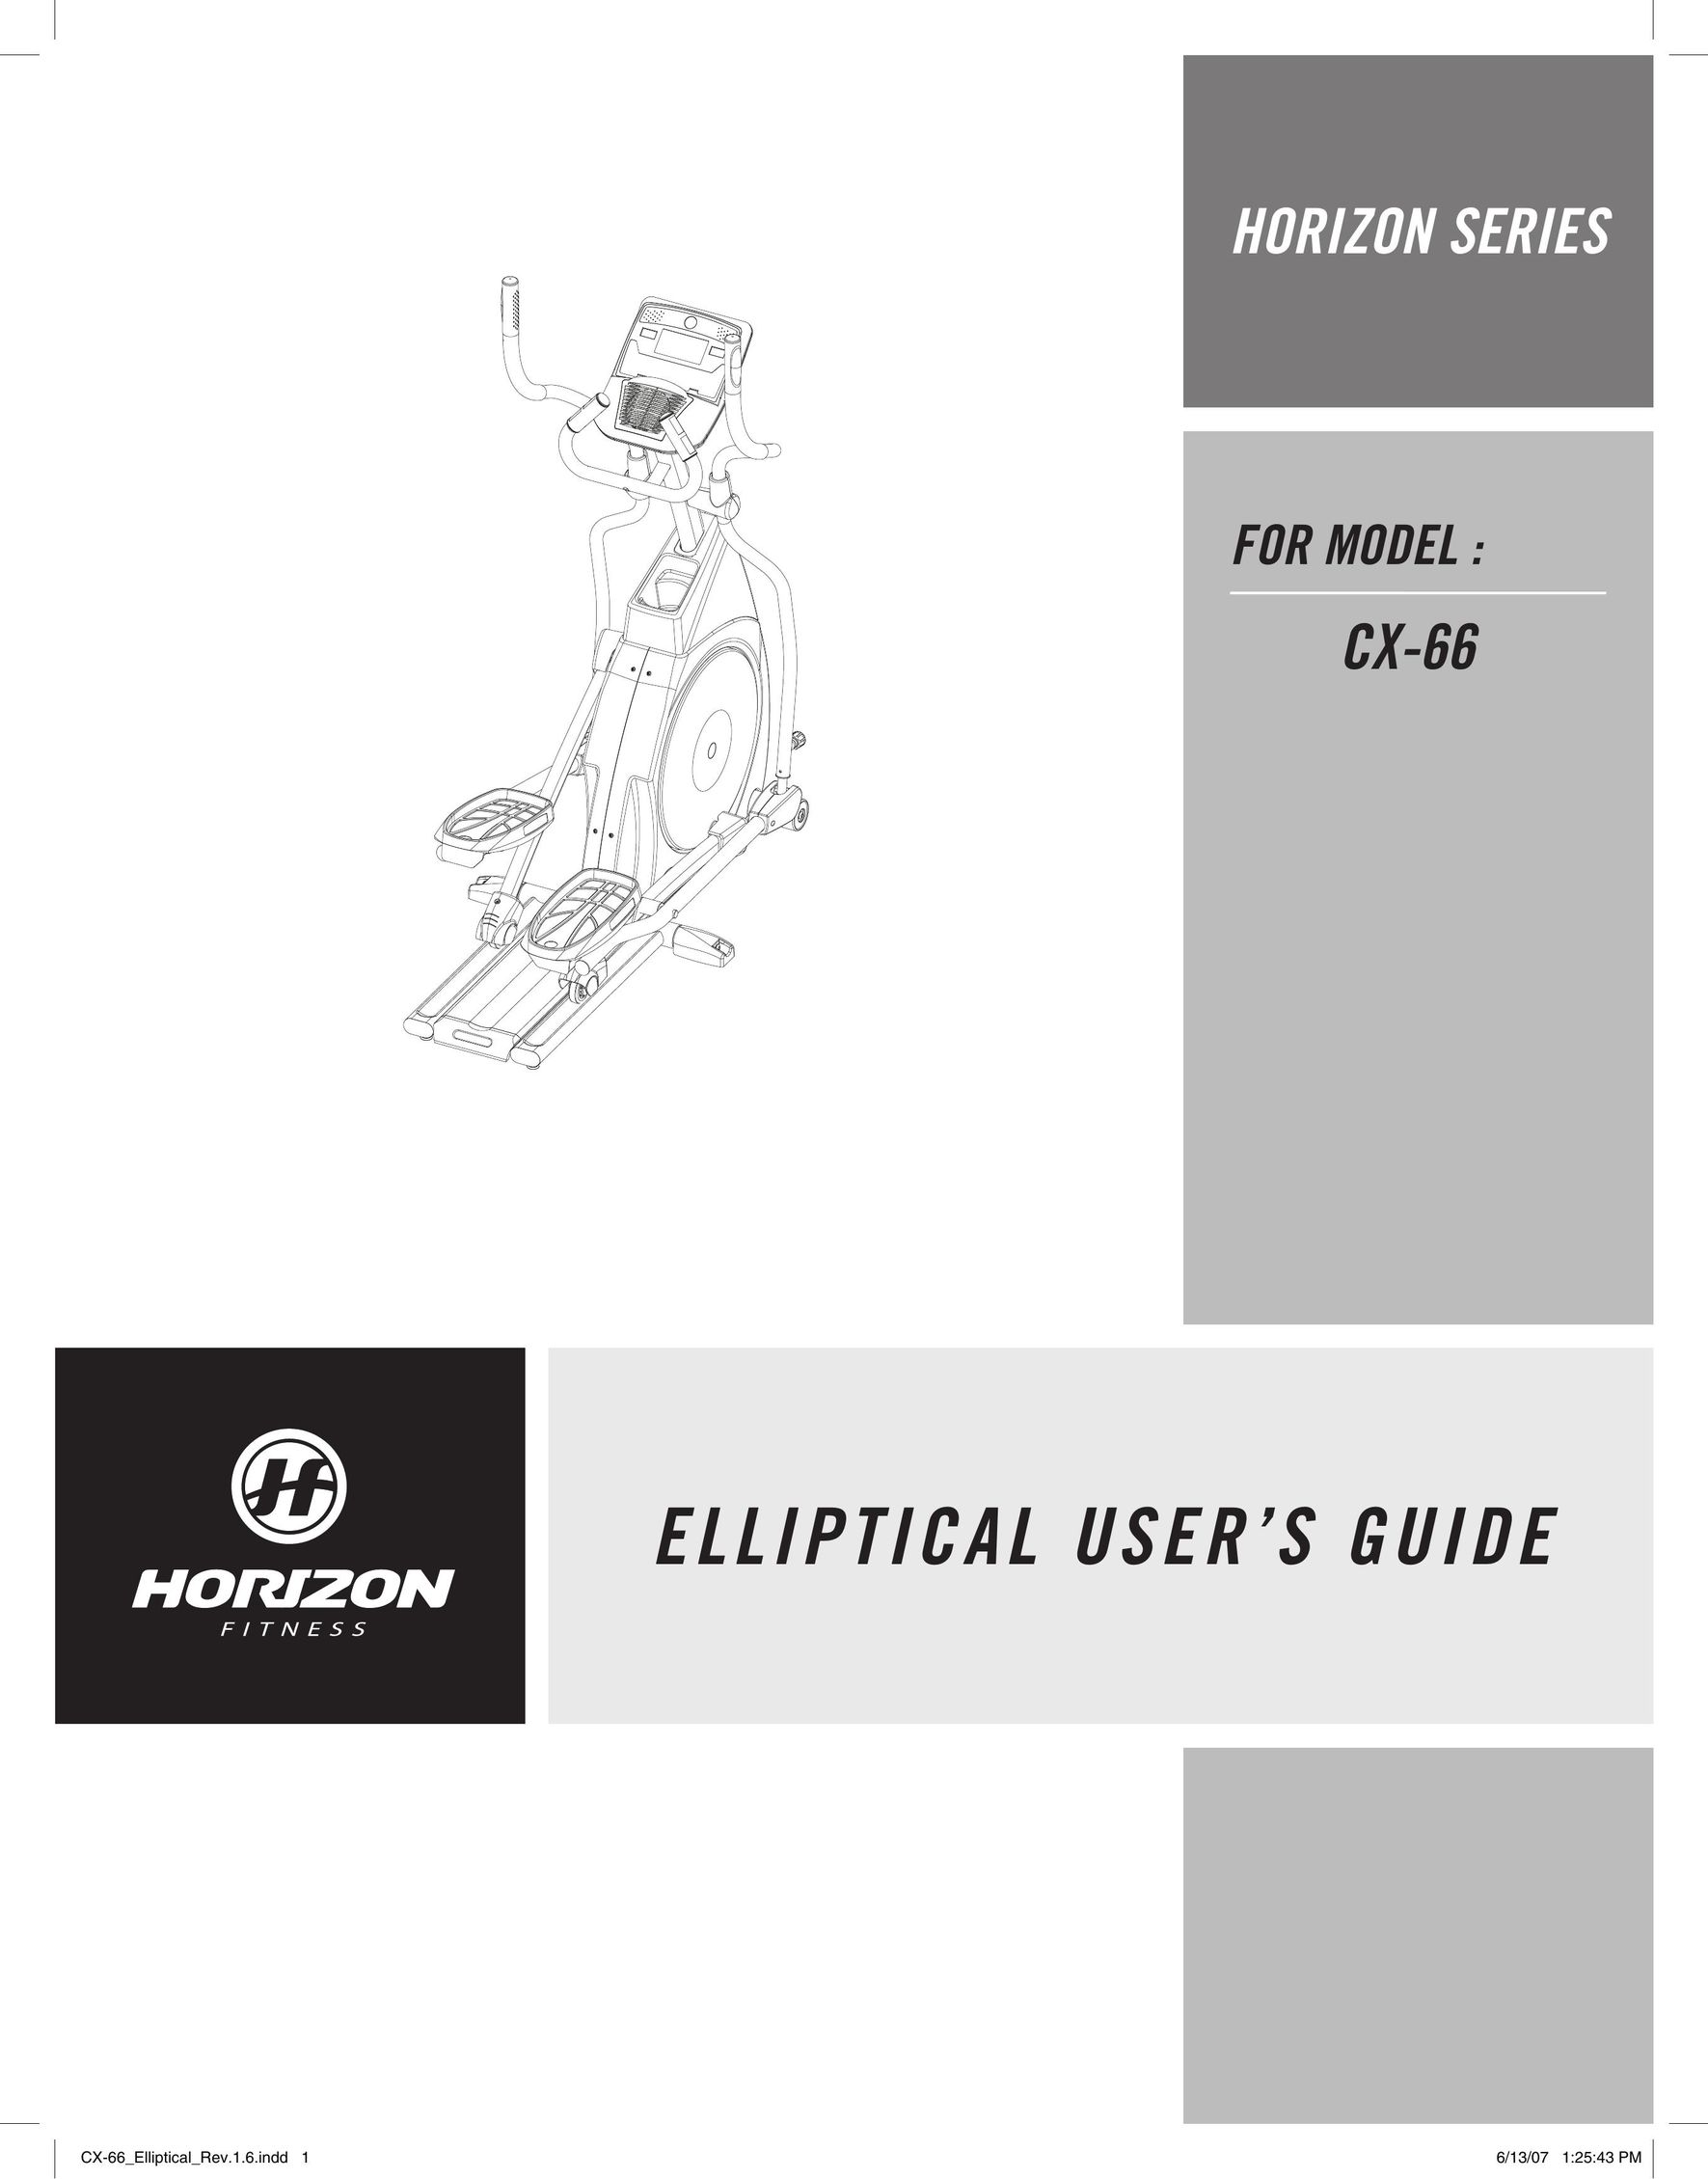 Horizon Fitness CX-66 Elliptical Trainer User Manual